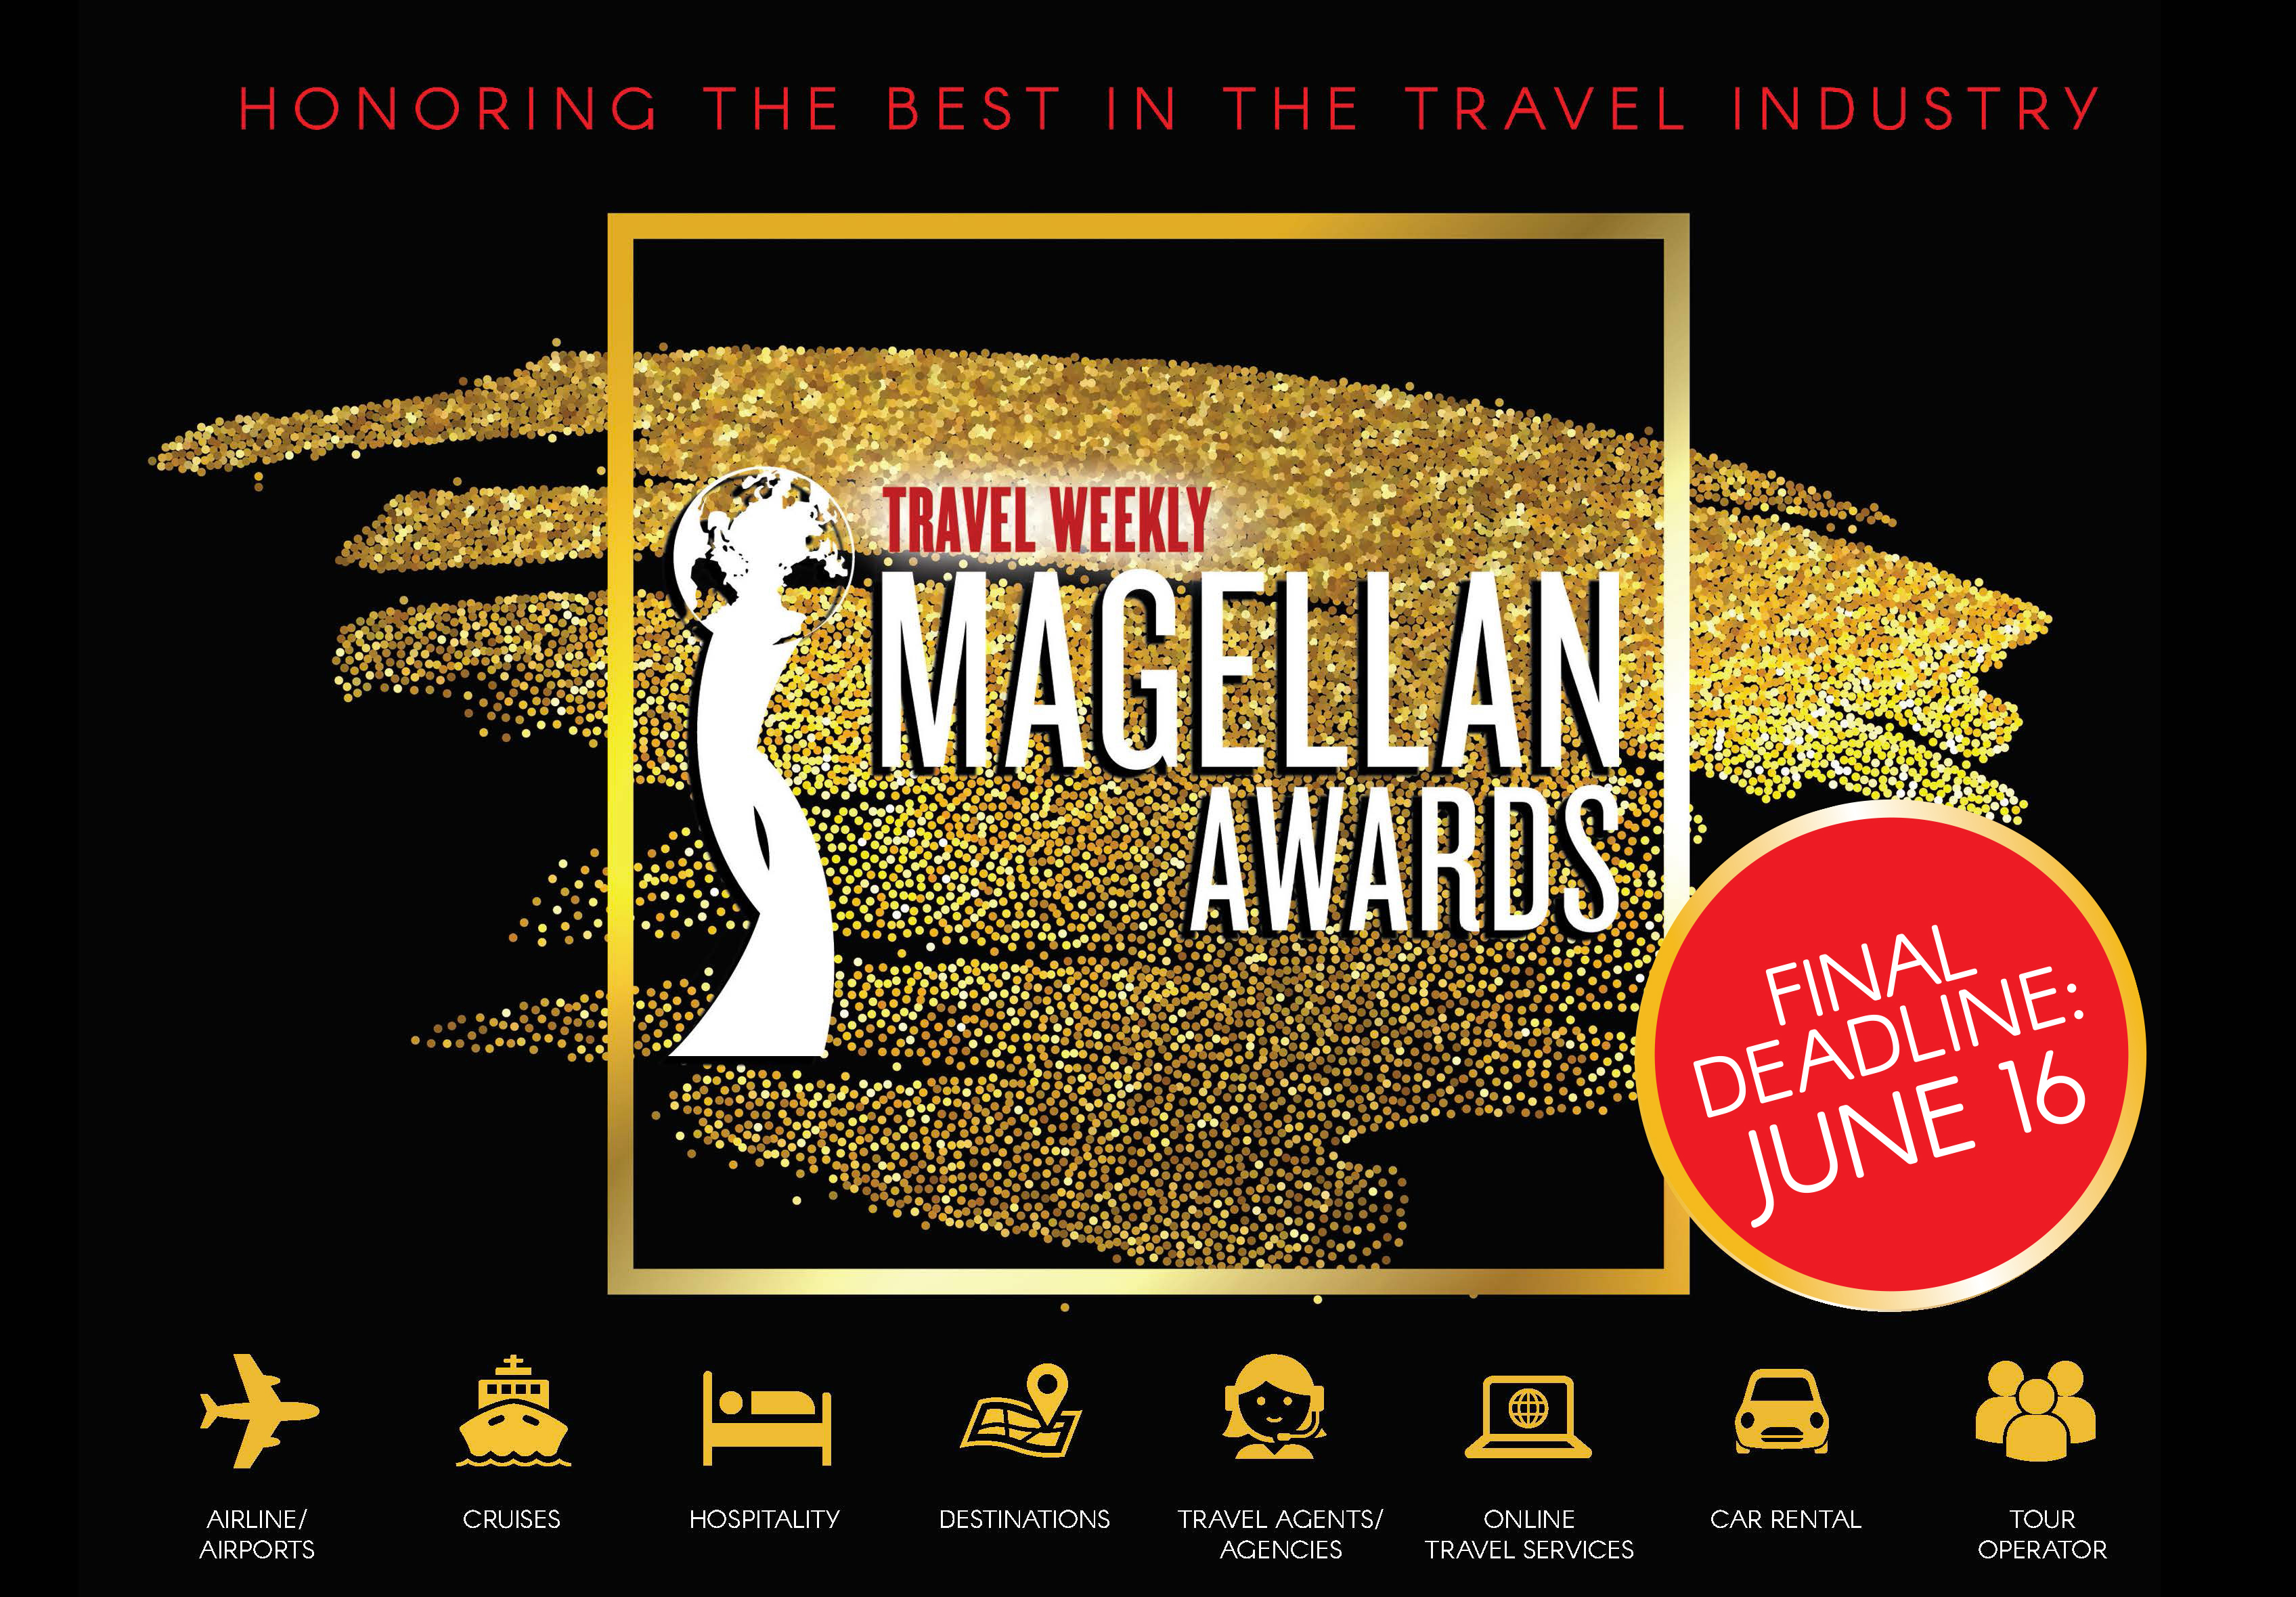 Travel Weekly's 2017 Magellan Awards / Final Deadline: June 16